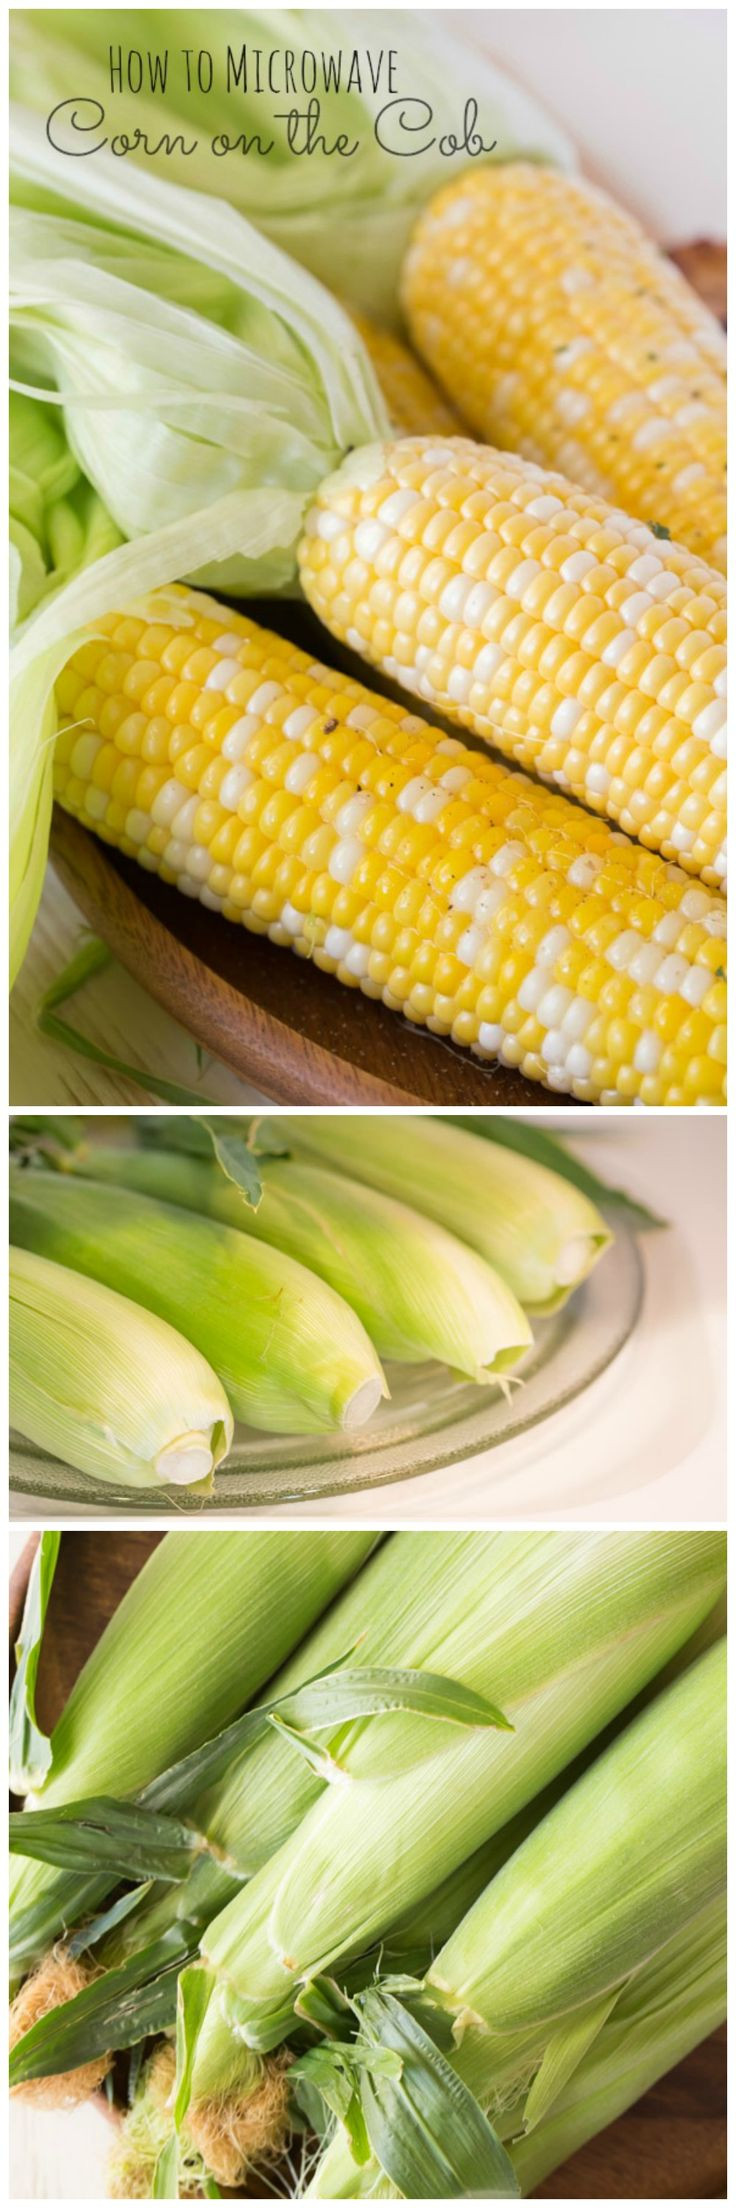 Microwave Corn On The Cob With Husk
 microwave corn on the cob without husk recipe